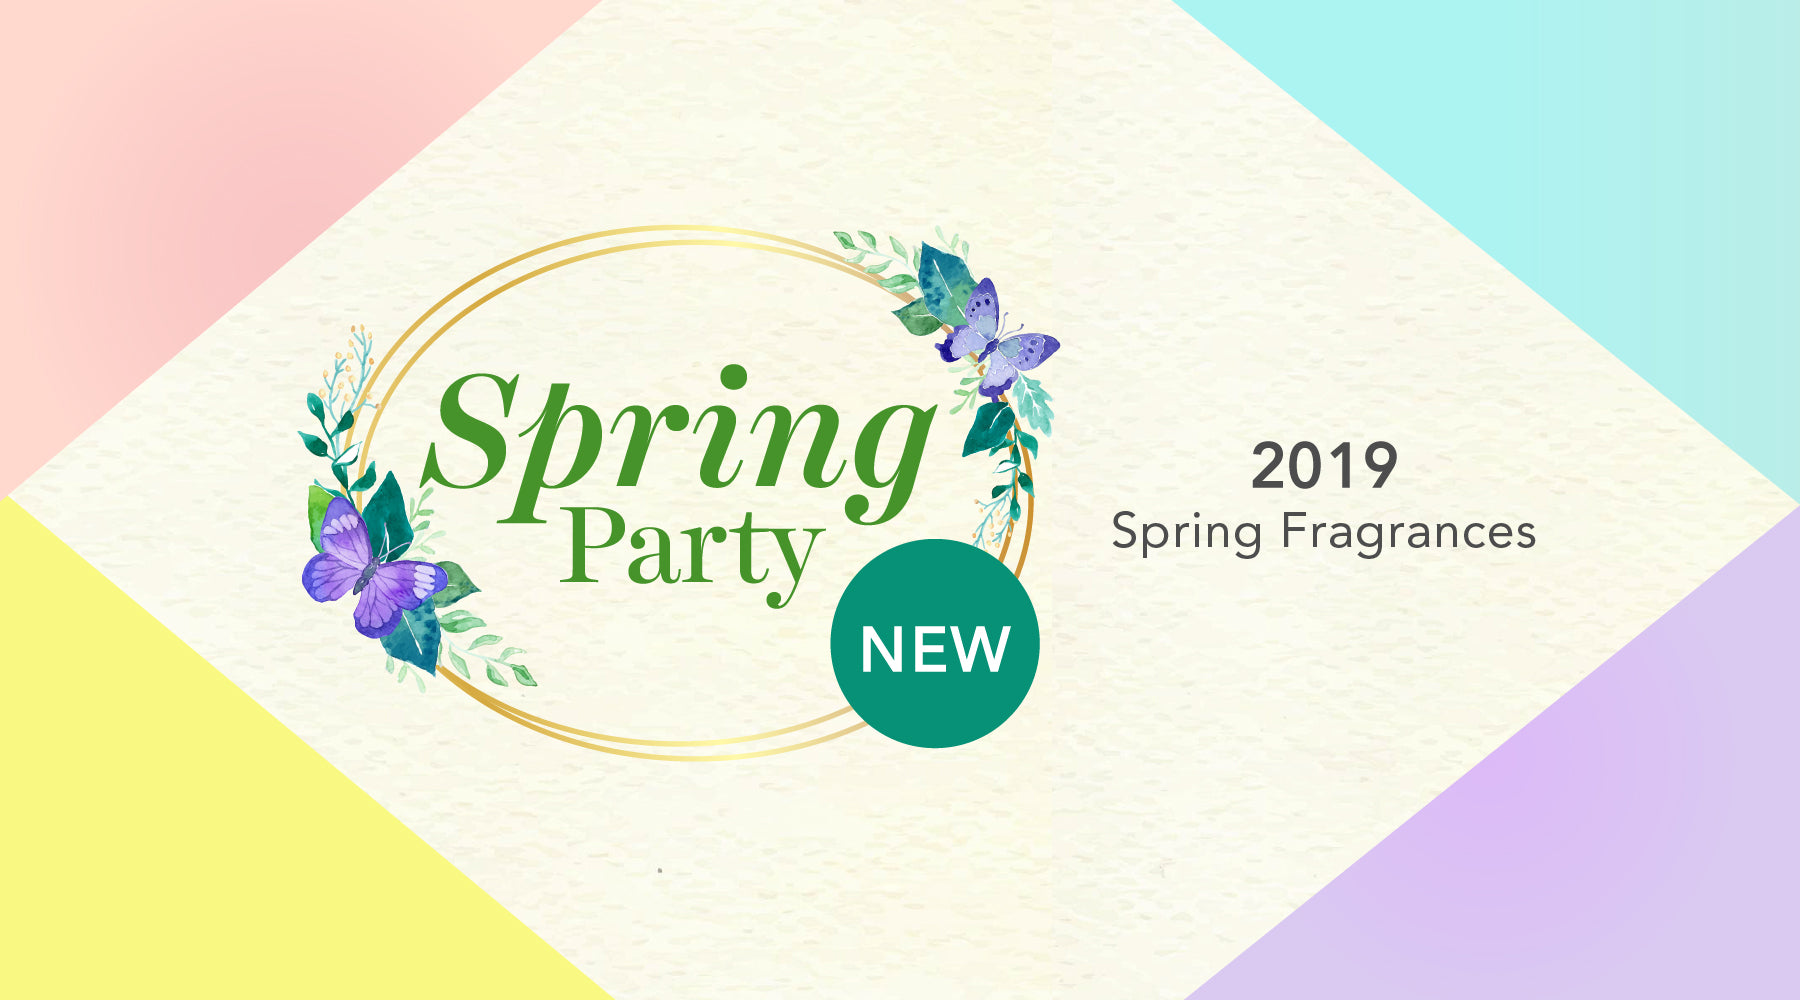 Spring Party - NEW 2019 Spring Fragrances